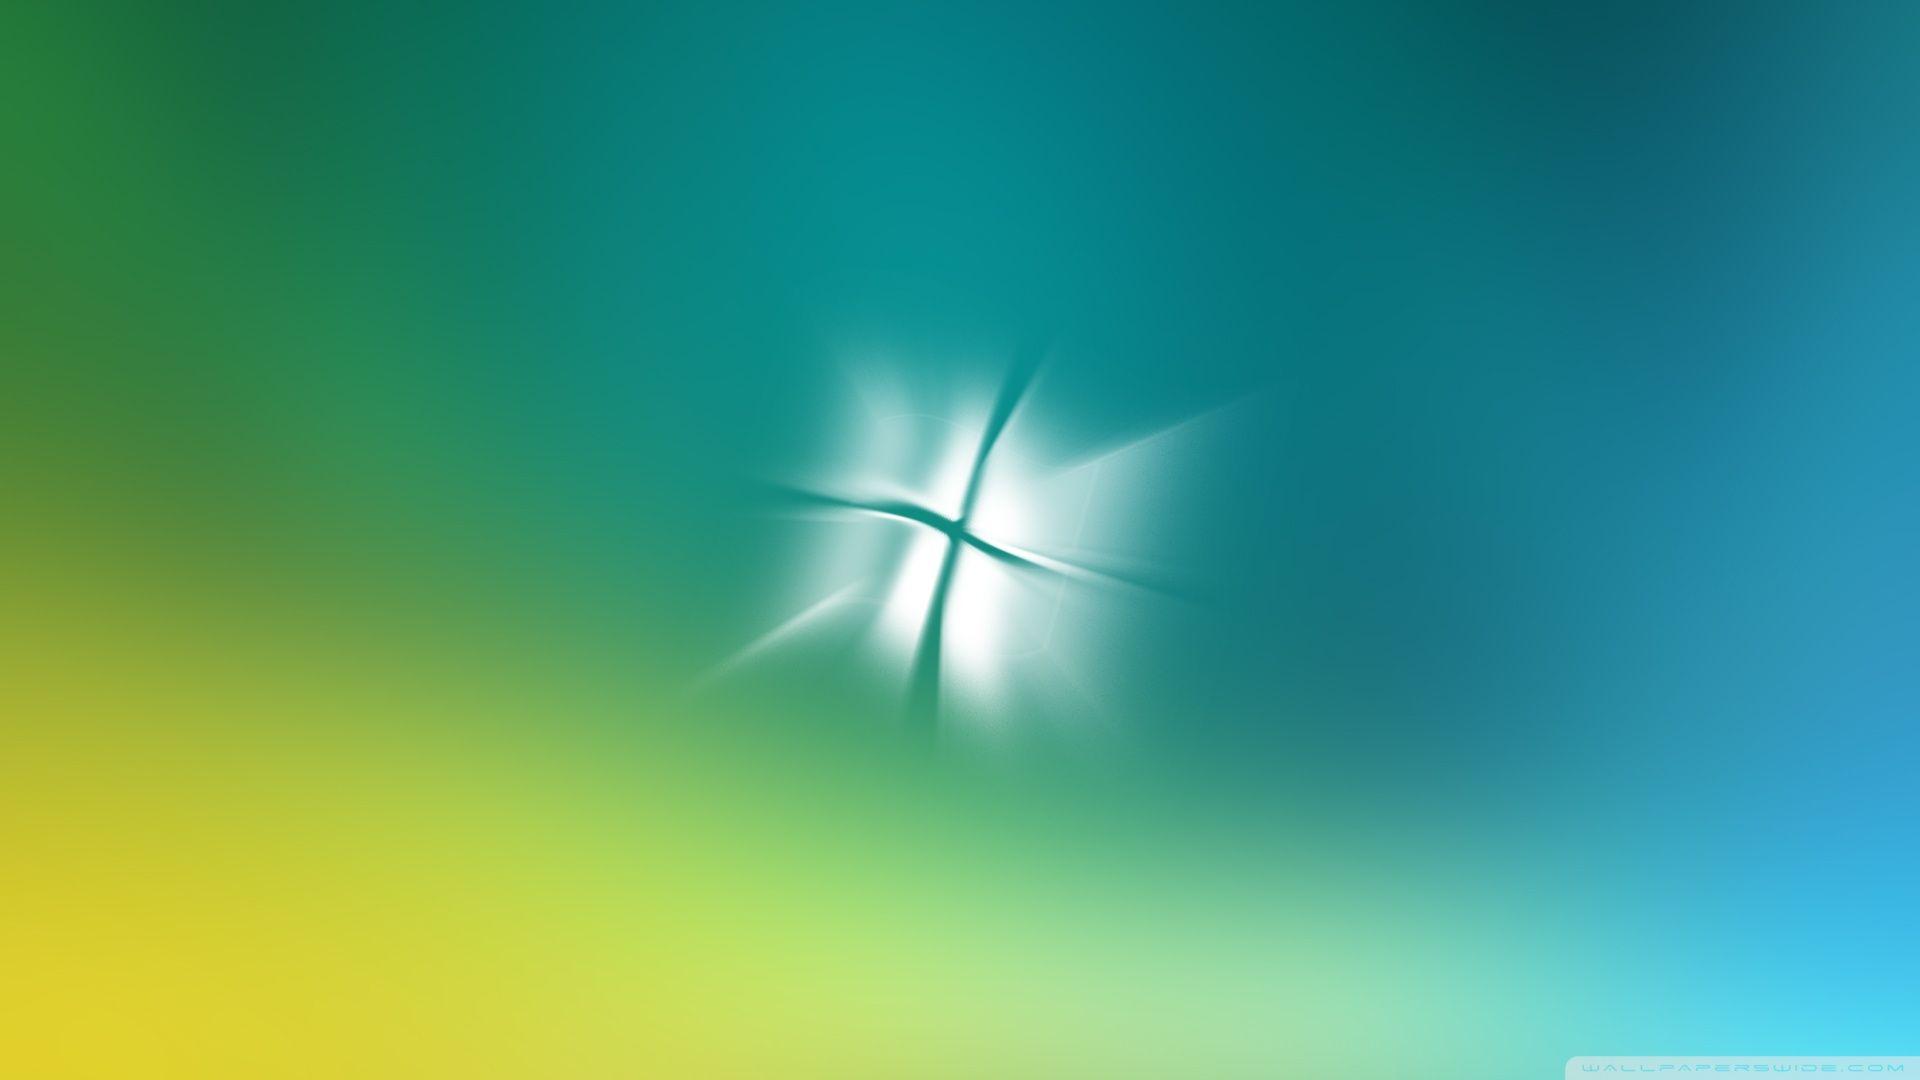 Abstract Windows Vista ❤ 4K HD Desktop Wallpaper for 4K Ultra HD TV